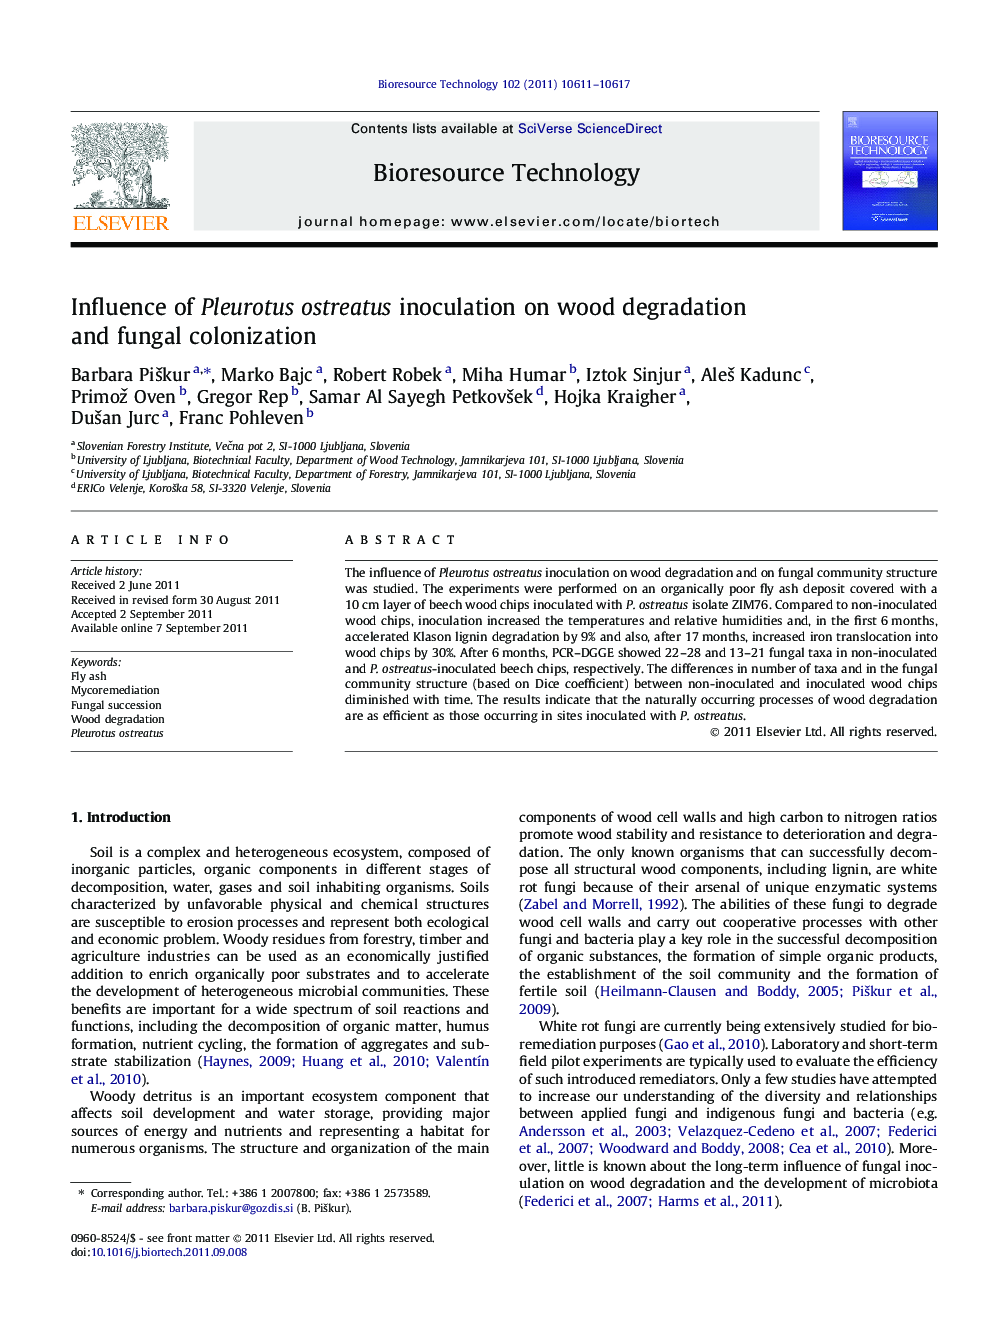 Influence of Pleurotus ostreatus inoculation on wood degradation and fungal colonization